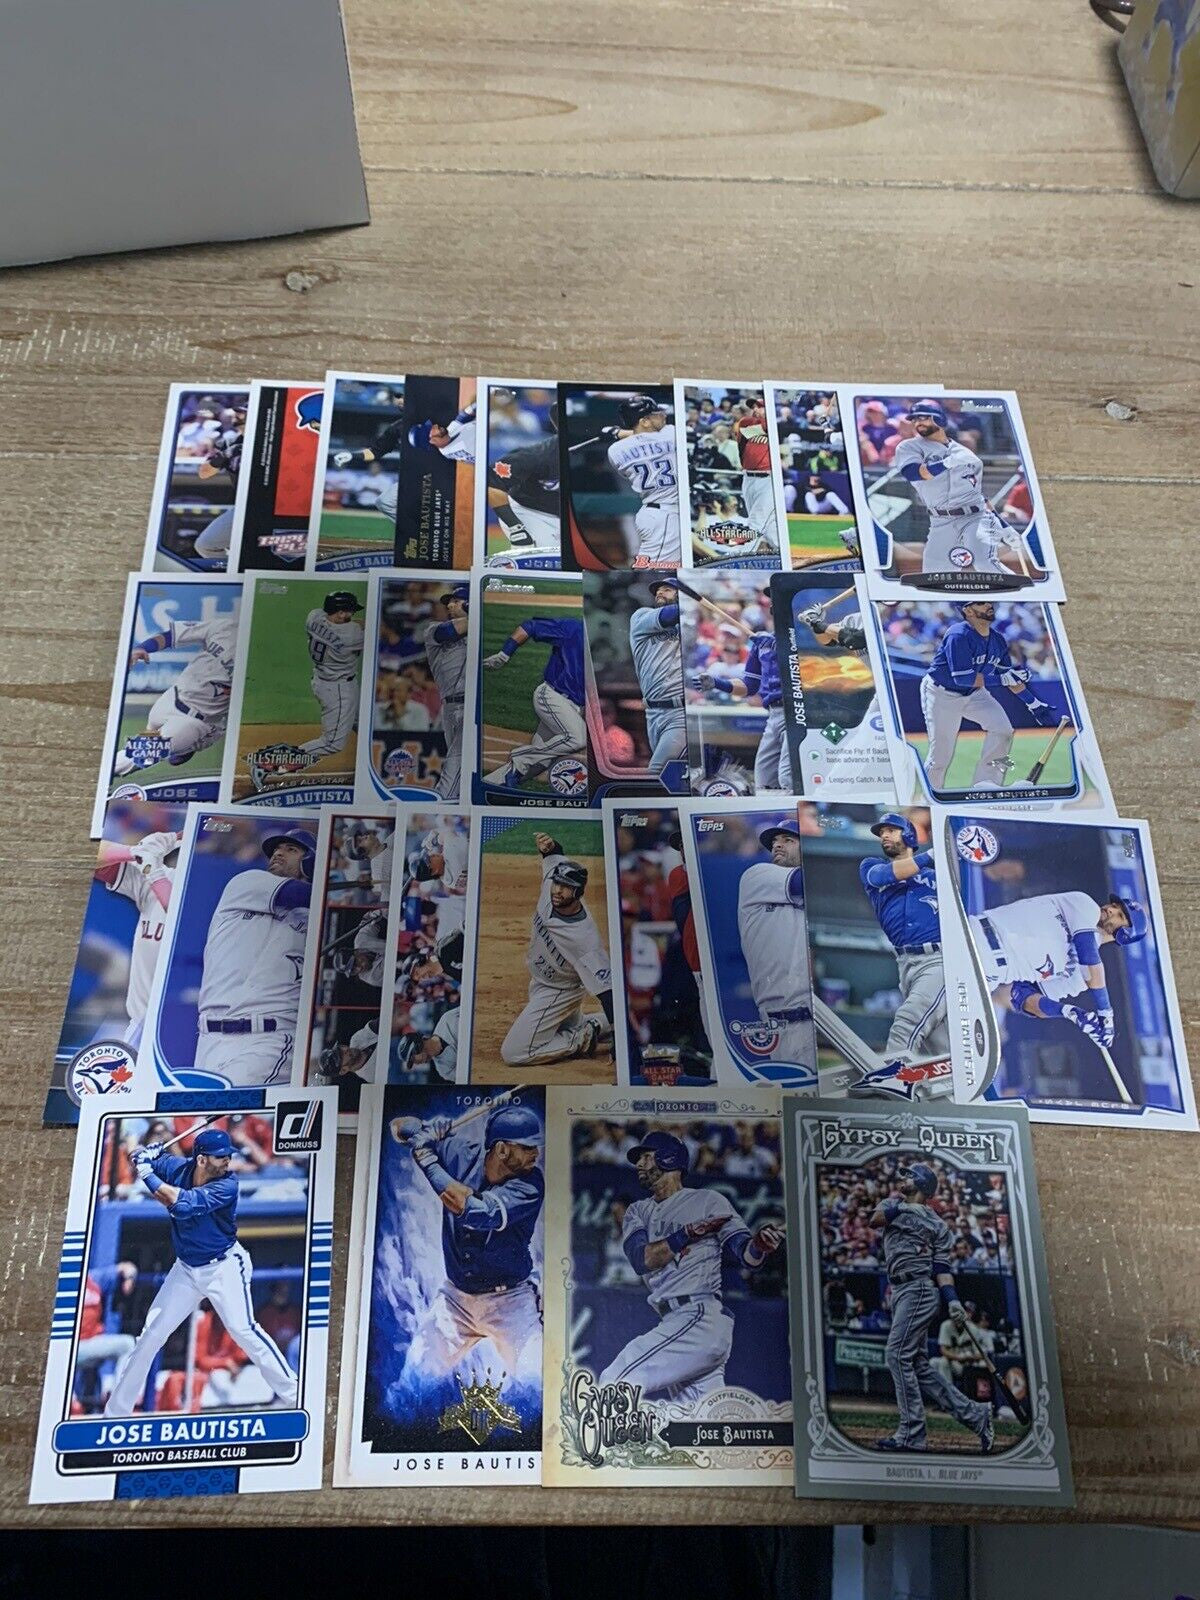 Jose Bautista Parallel Card - Toronto Blue Jays - MLB Baseball - Sports Card Single (Randomly Selected, May Not Be Pictured)